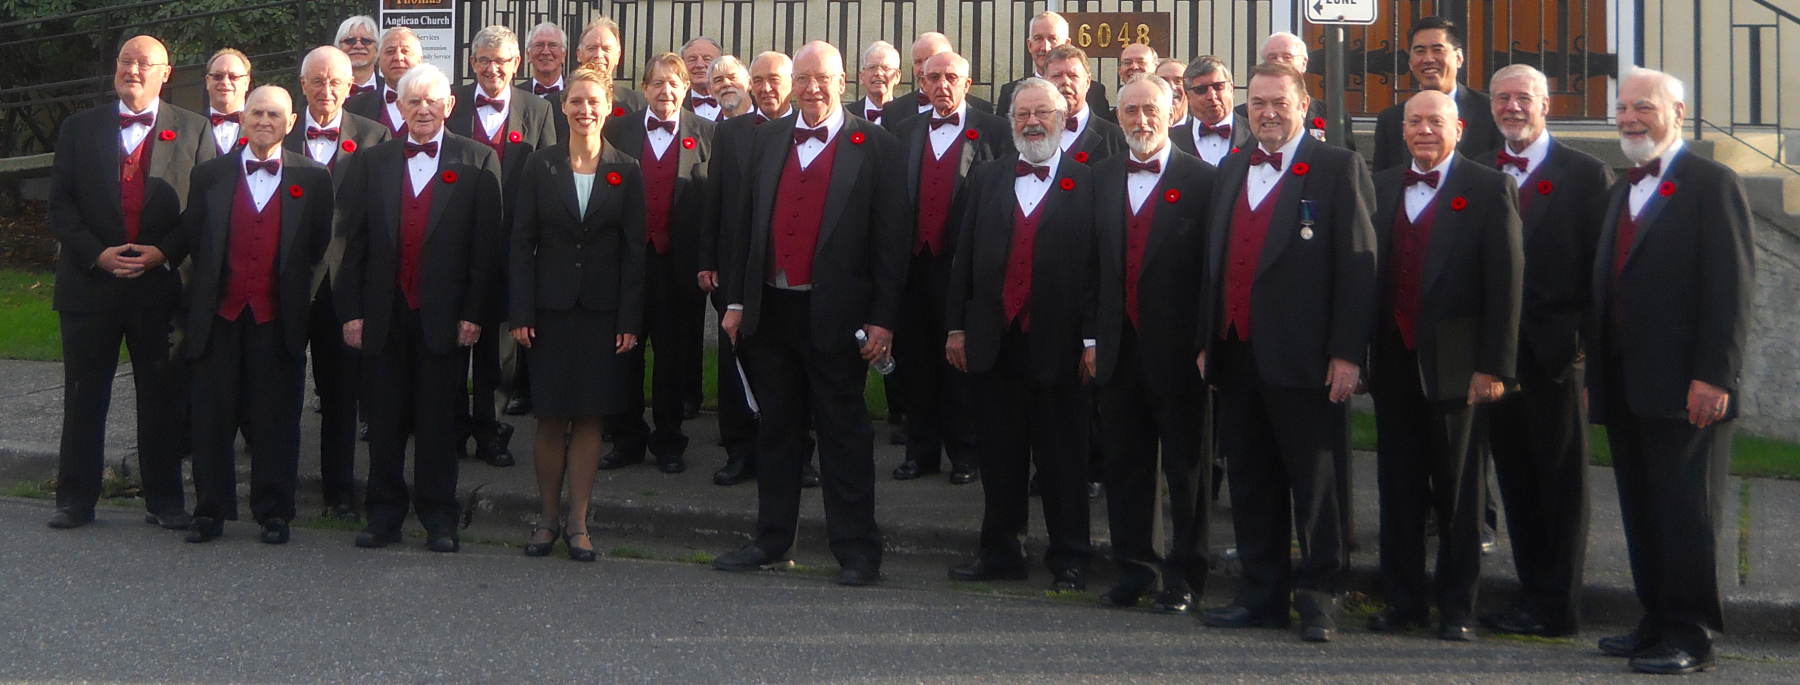 Vancouver Orpheus Choir
